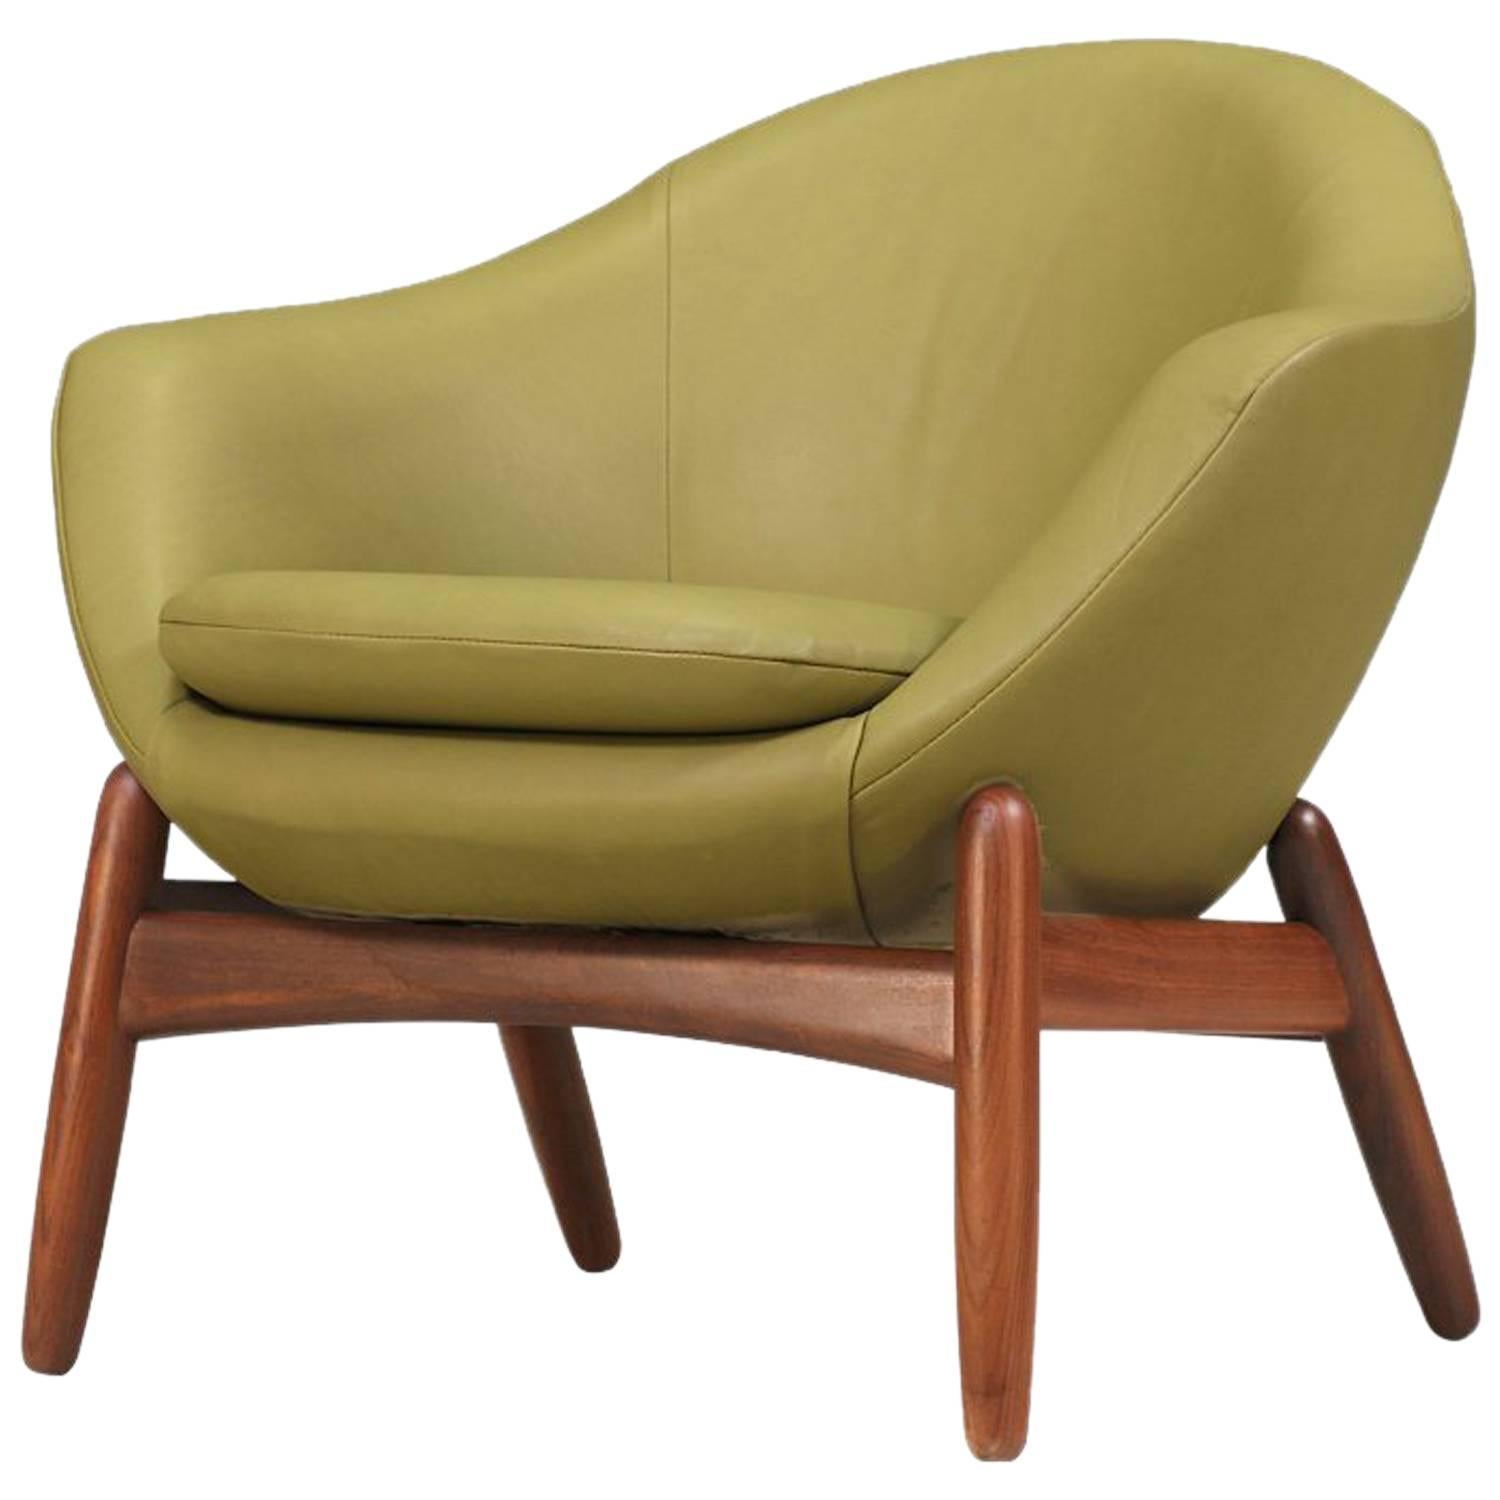 Ib Kofod-Larsen "Pod" Leather Chair for Povl Dinesen